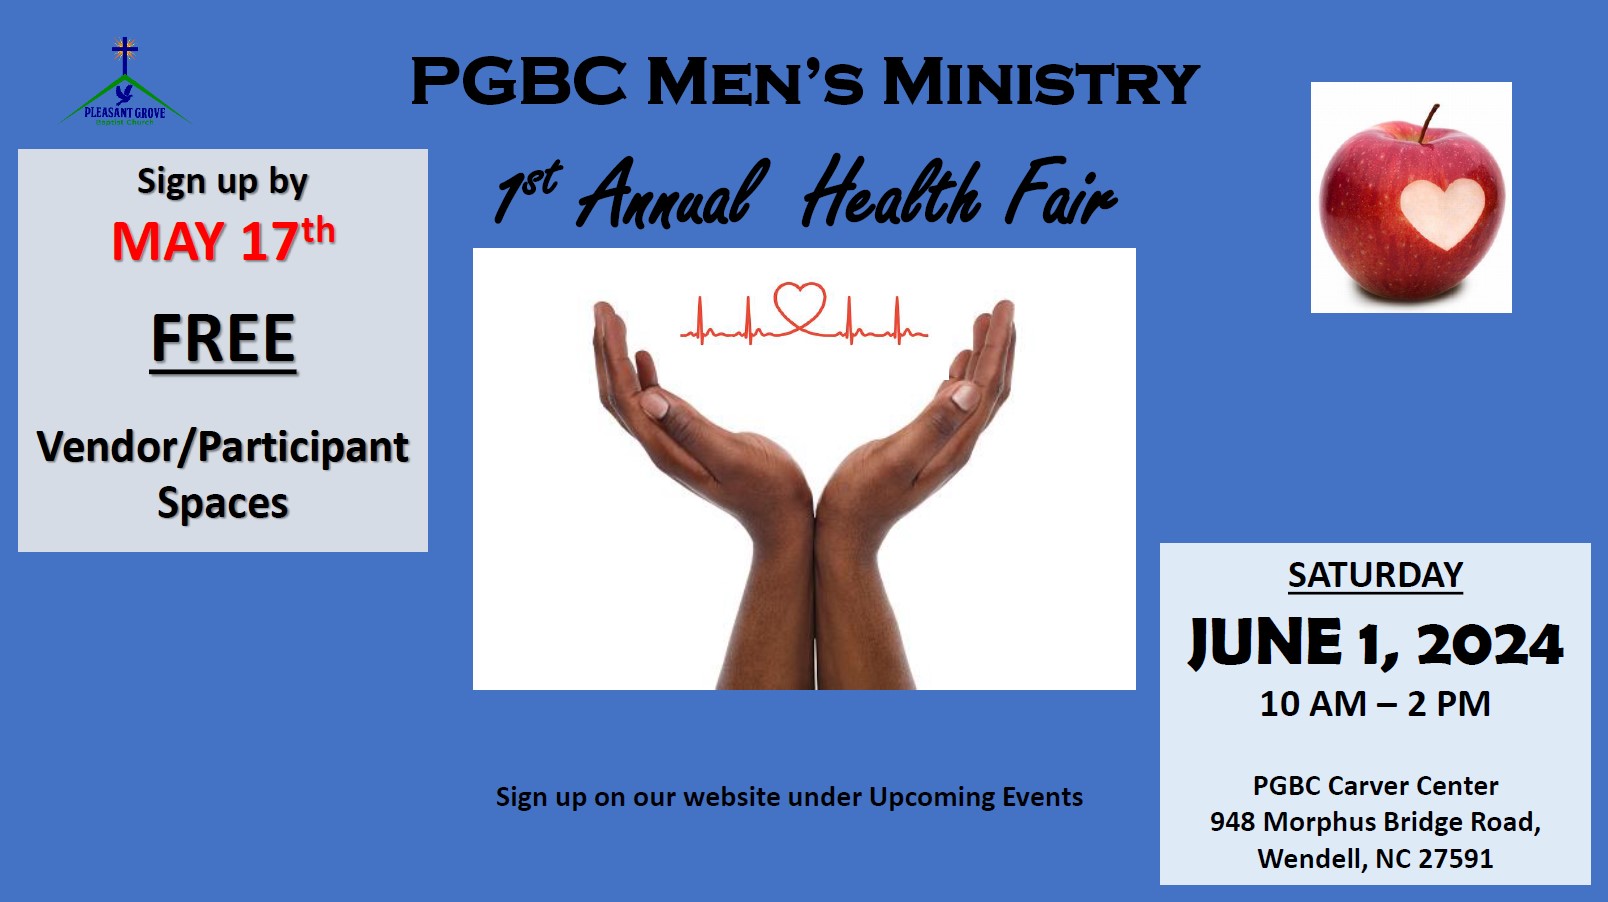 PGBC Men's Ministry Health Fair, Saturday, June 1, 2024, 10 am - 2pm